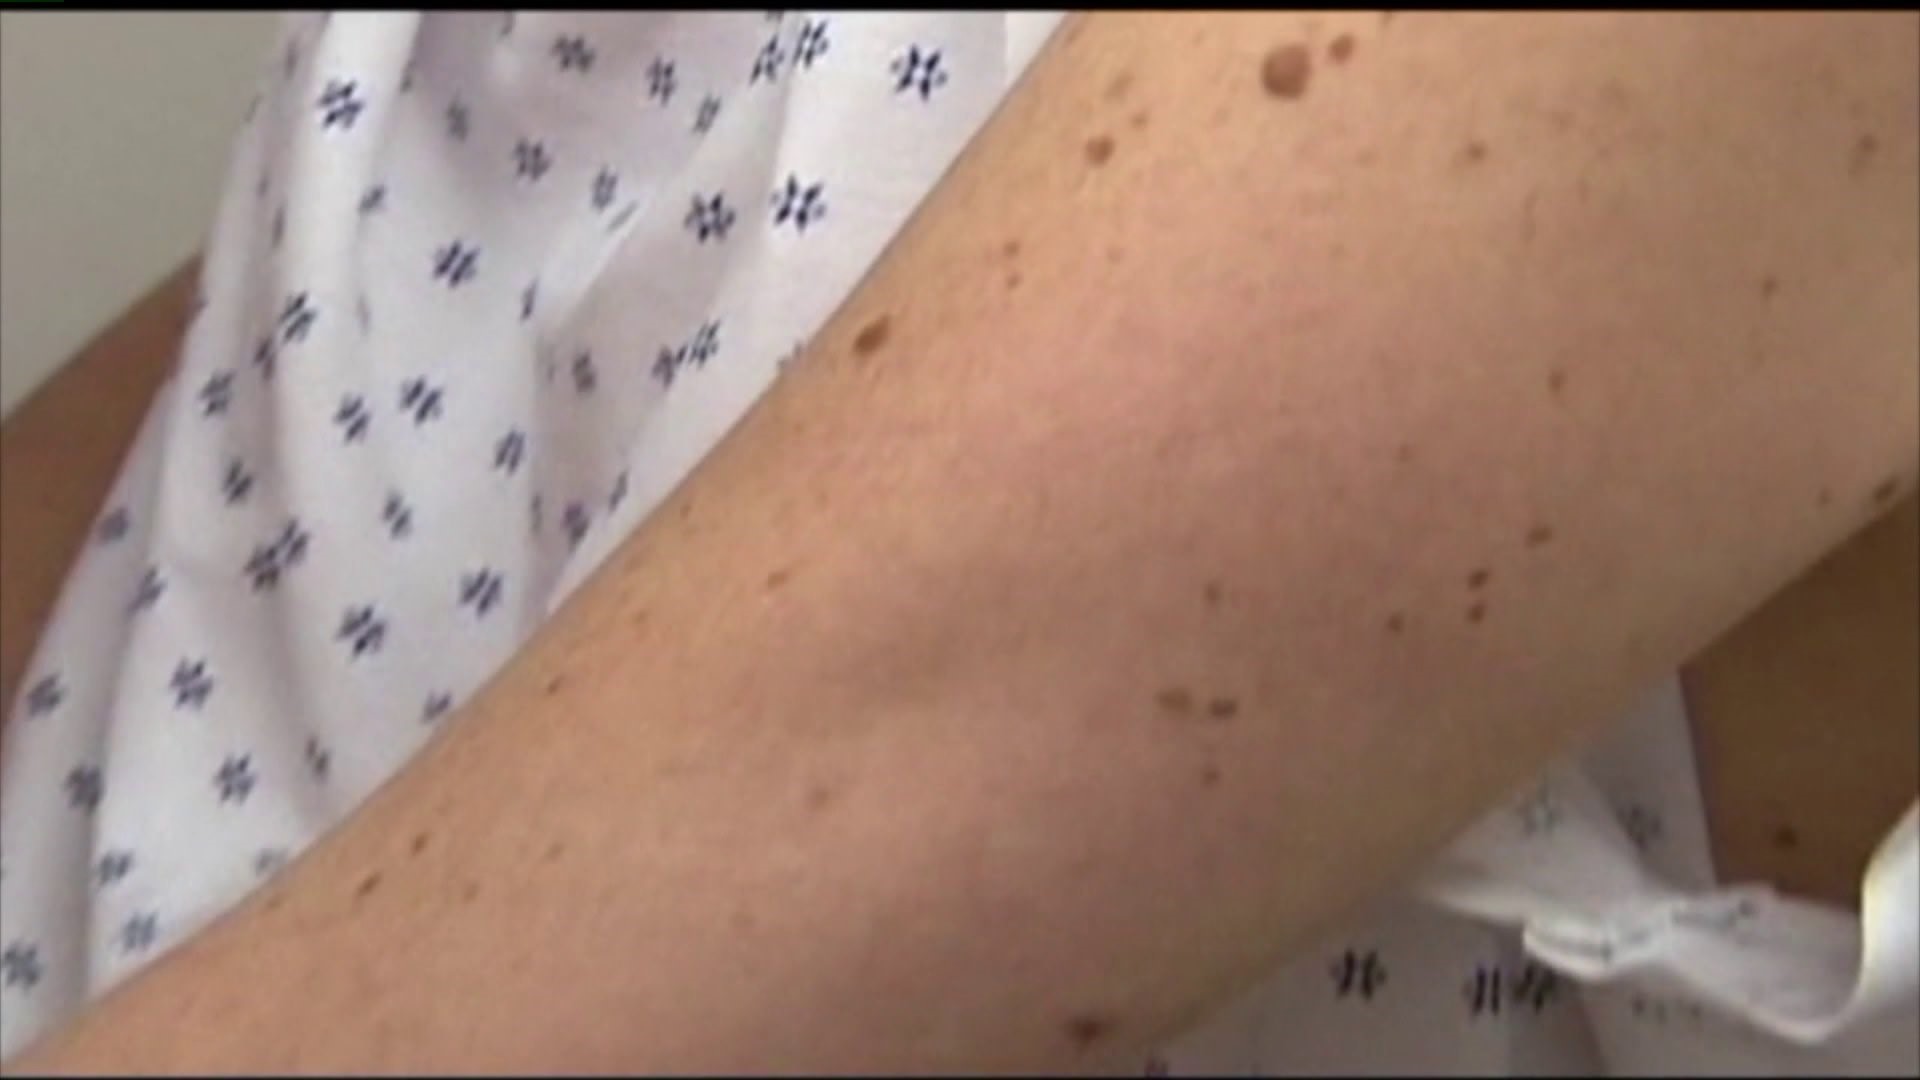 Detecting skin cancer